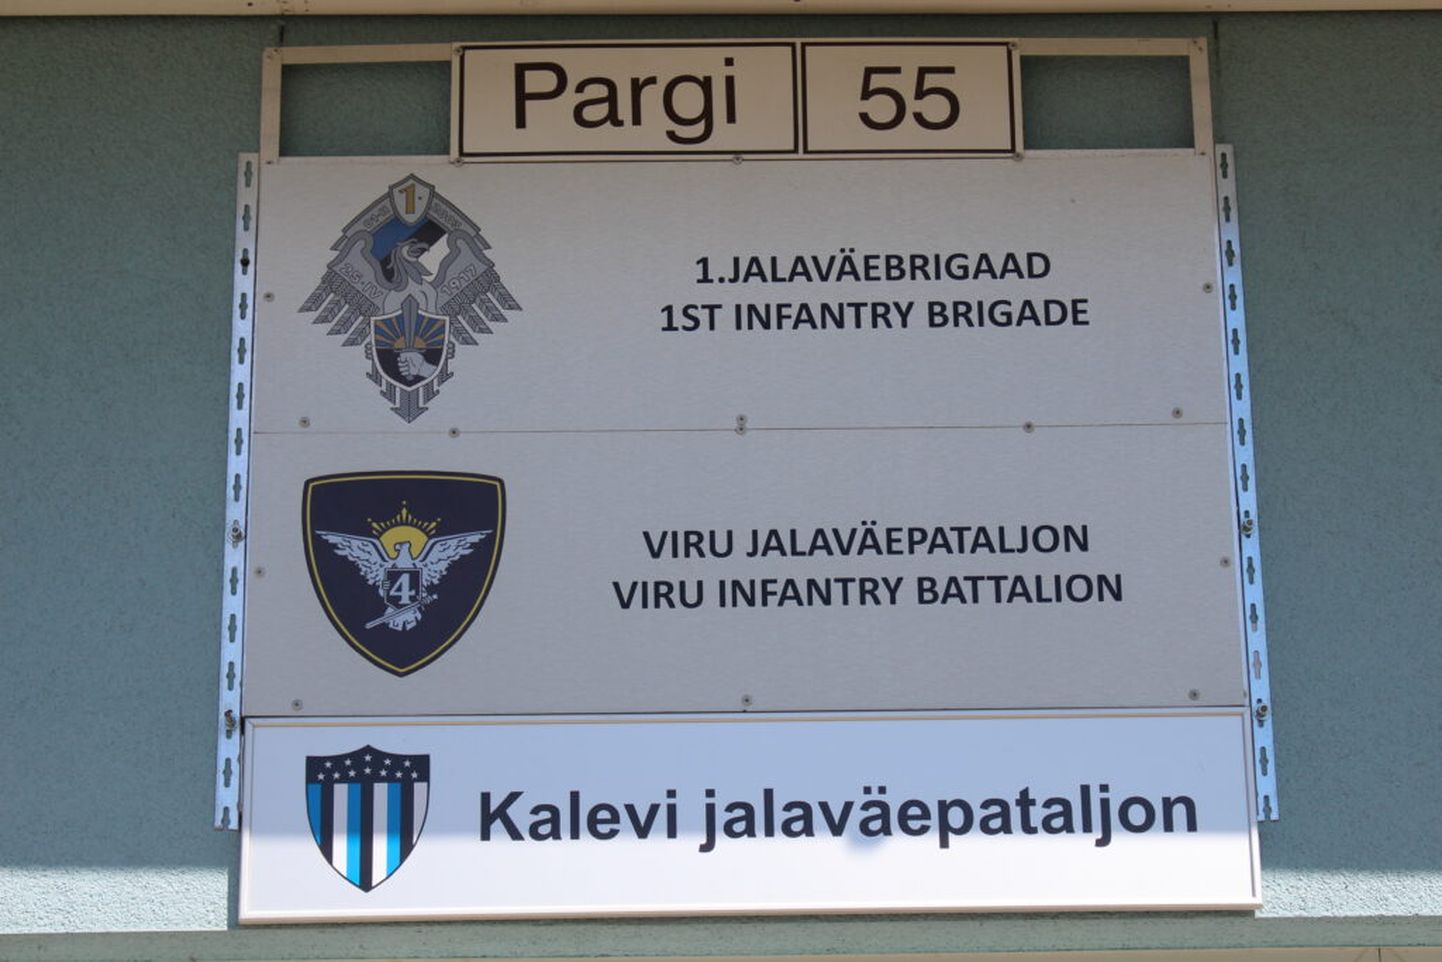 Kalevi jalaväepataljon kolis Palldiskist Jõhvi.